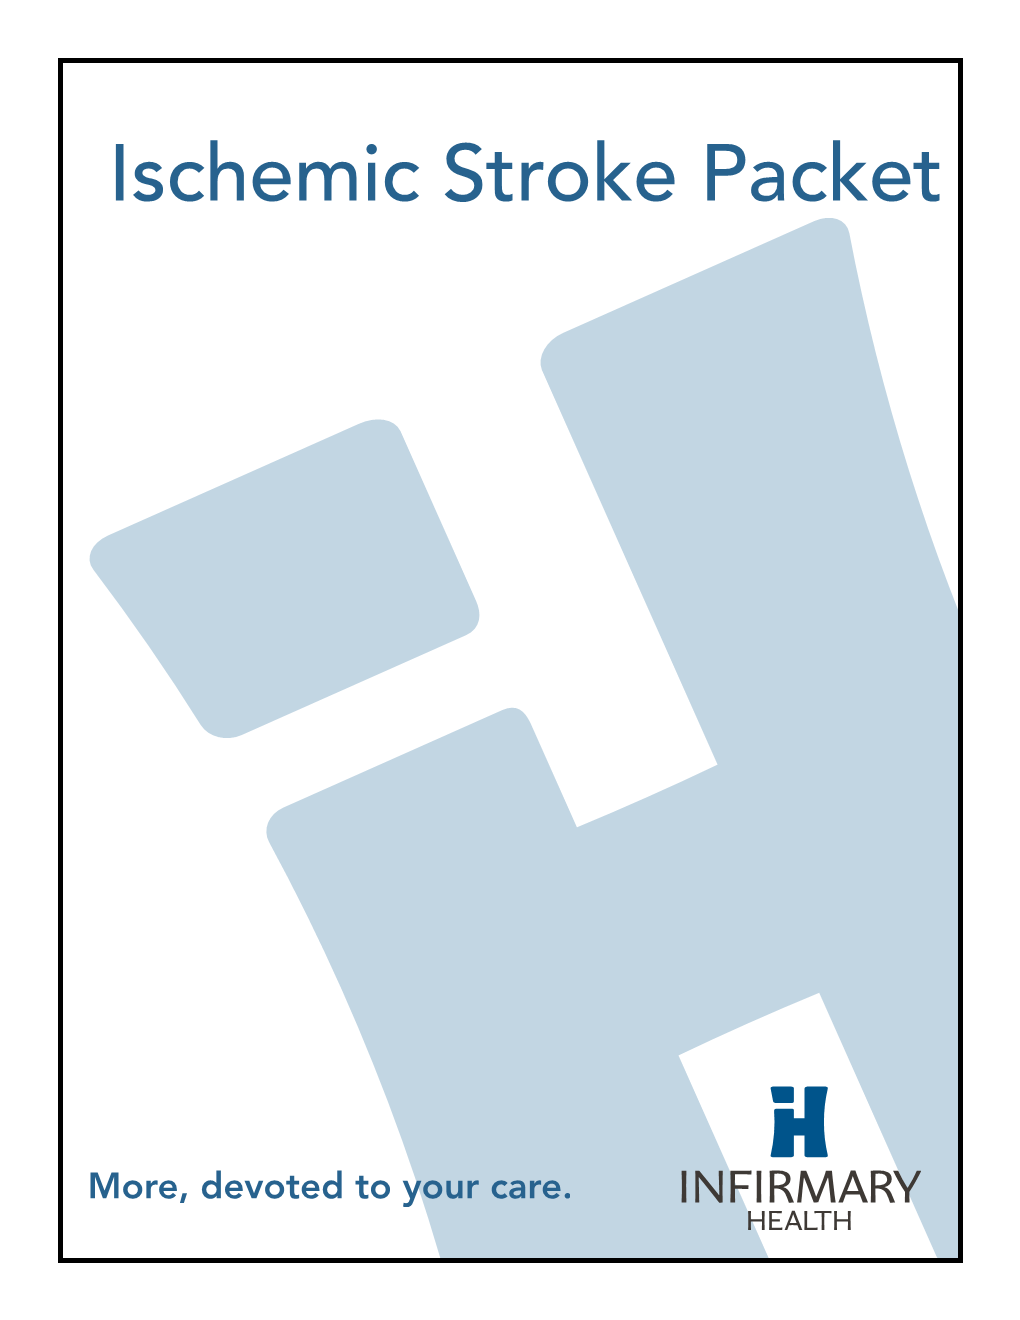 Ischemic Stroke Packet Prevention